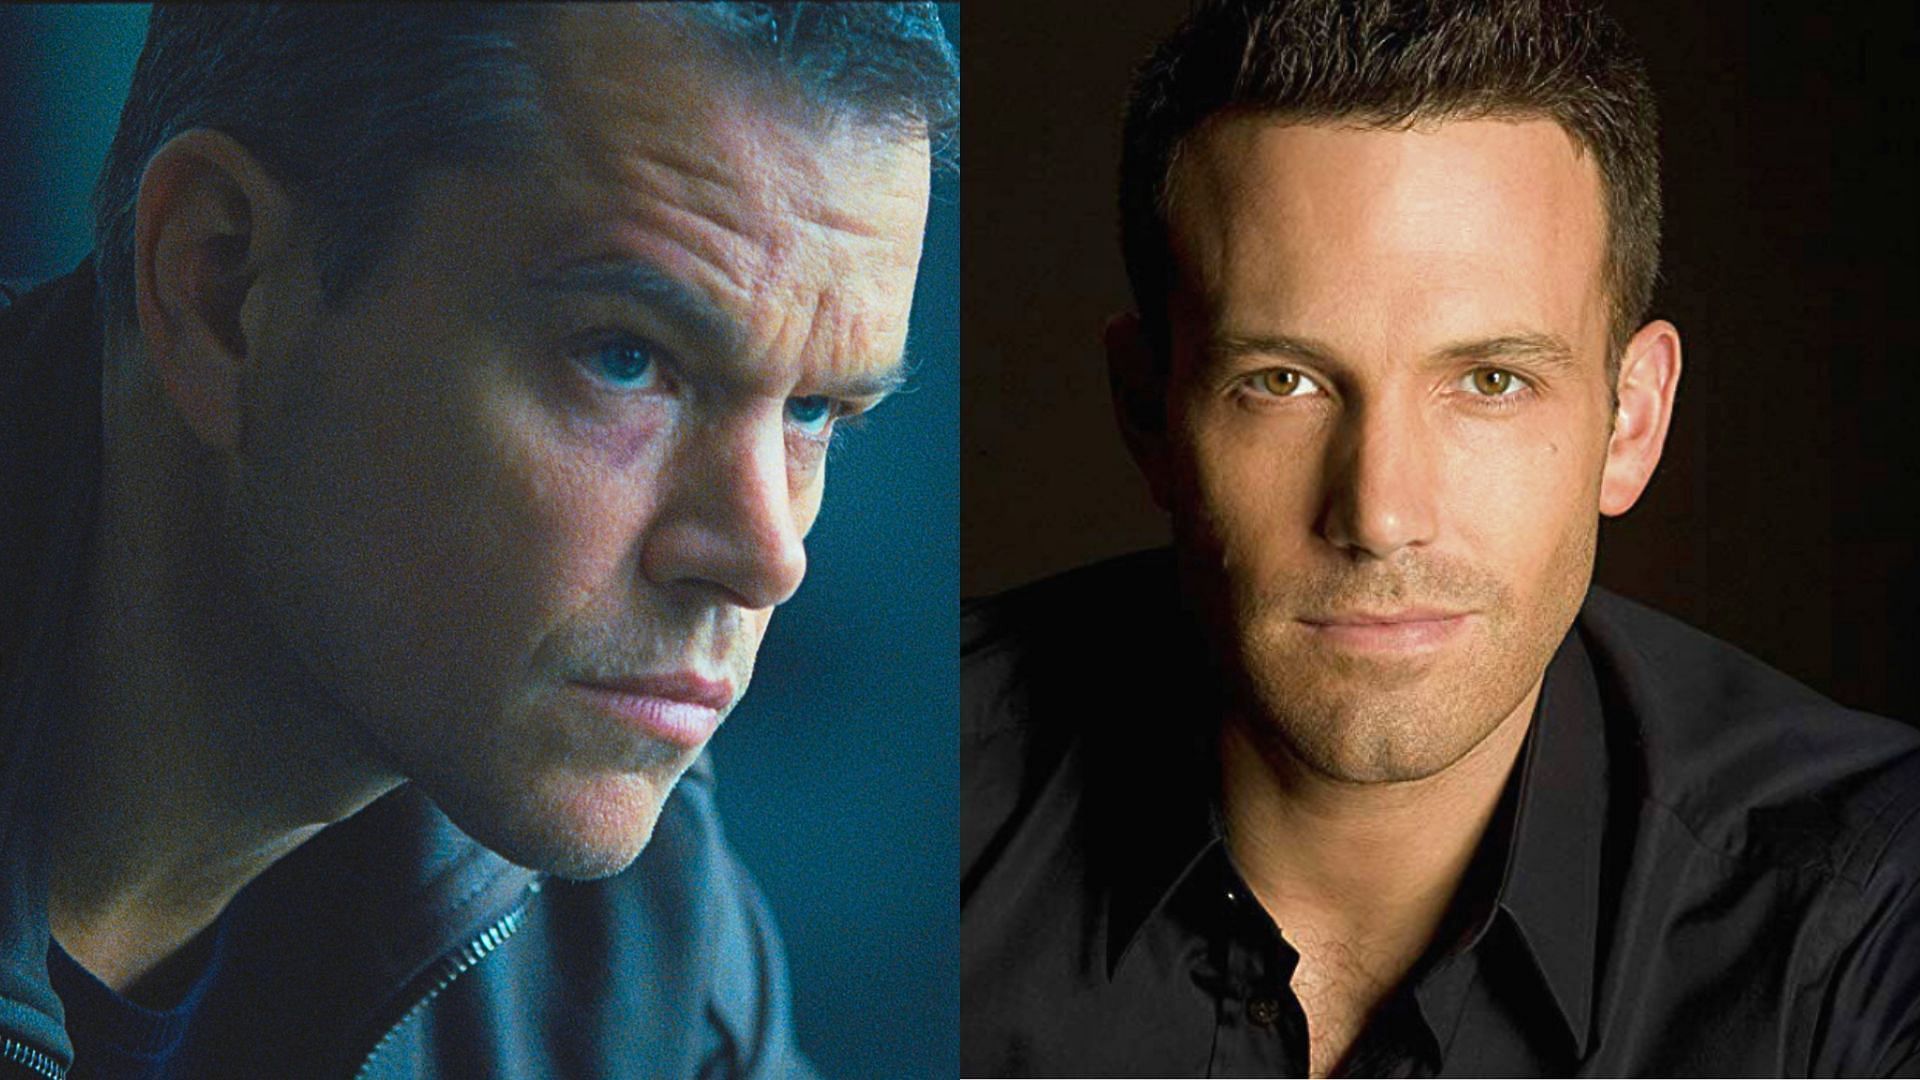 Nine Ben Affleck and Matt Damon movies have released so far (Images via IMDb)